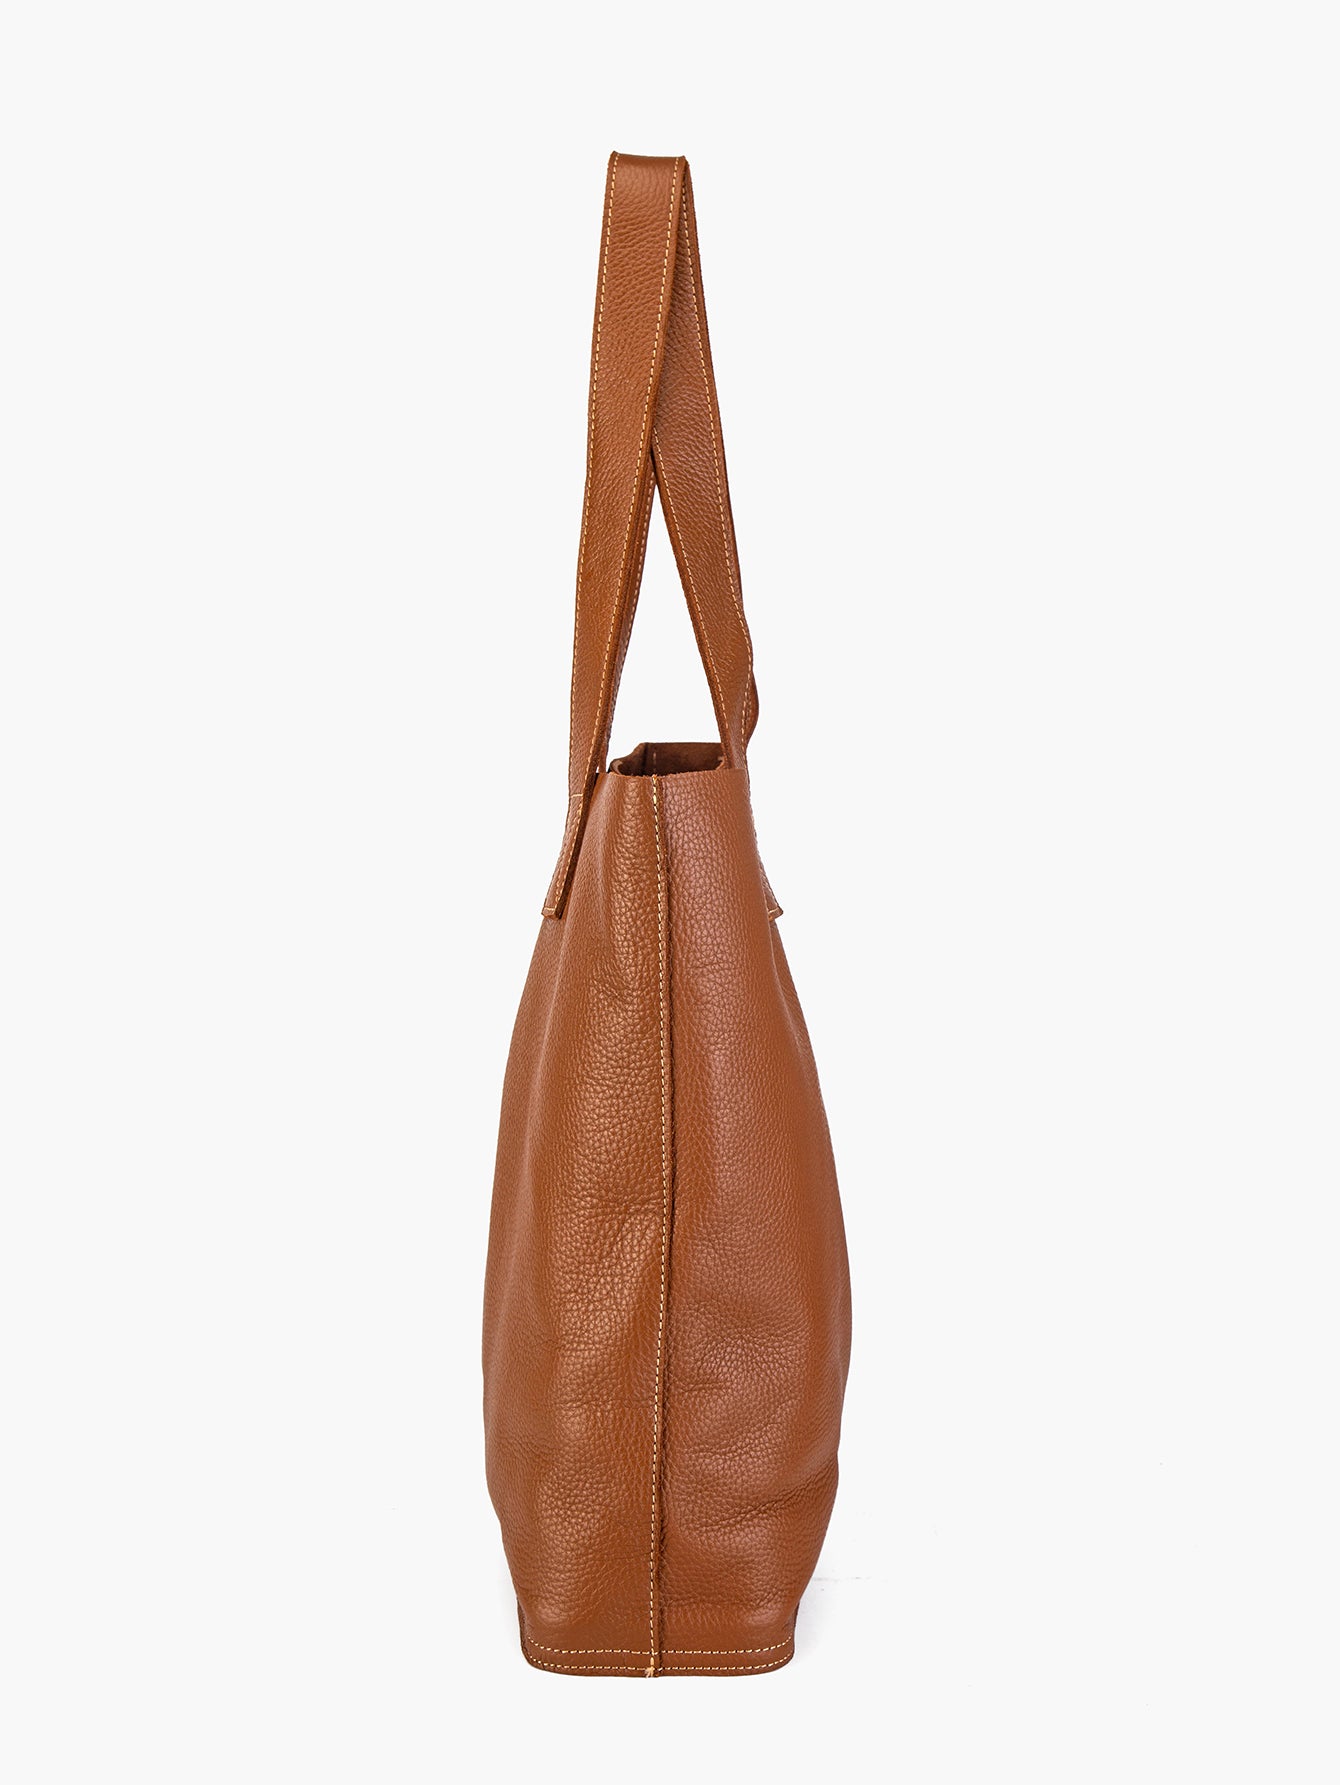 Plus Size Natural Calfskin Classic Tote Bag